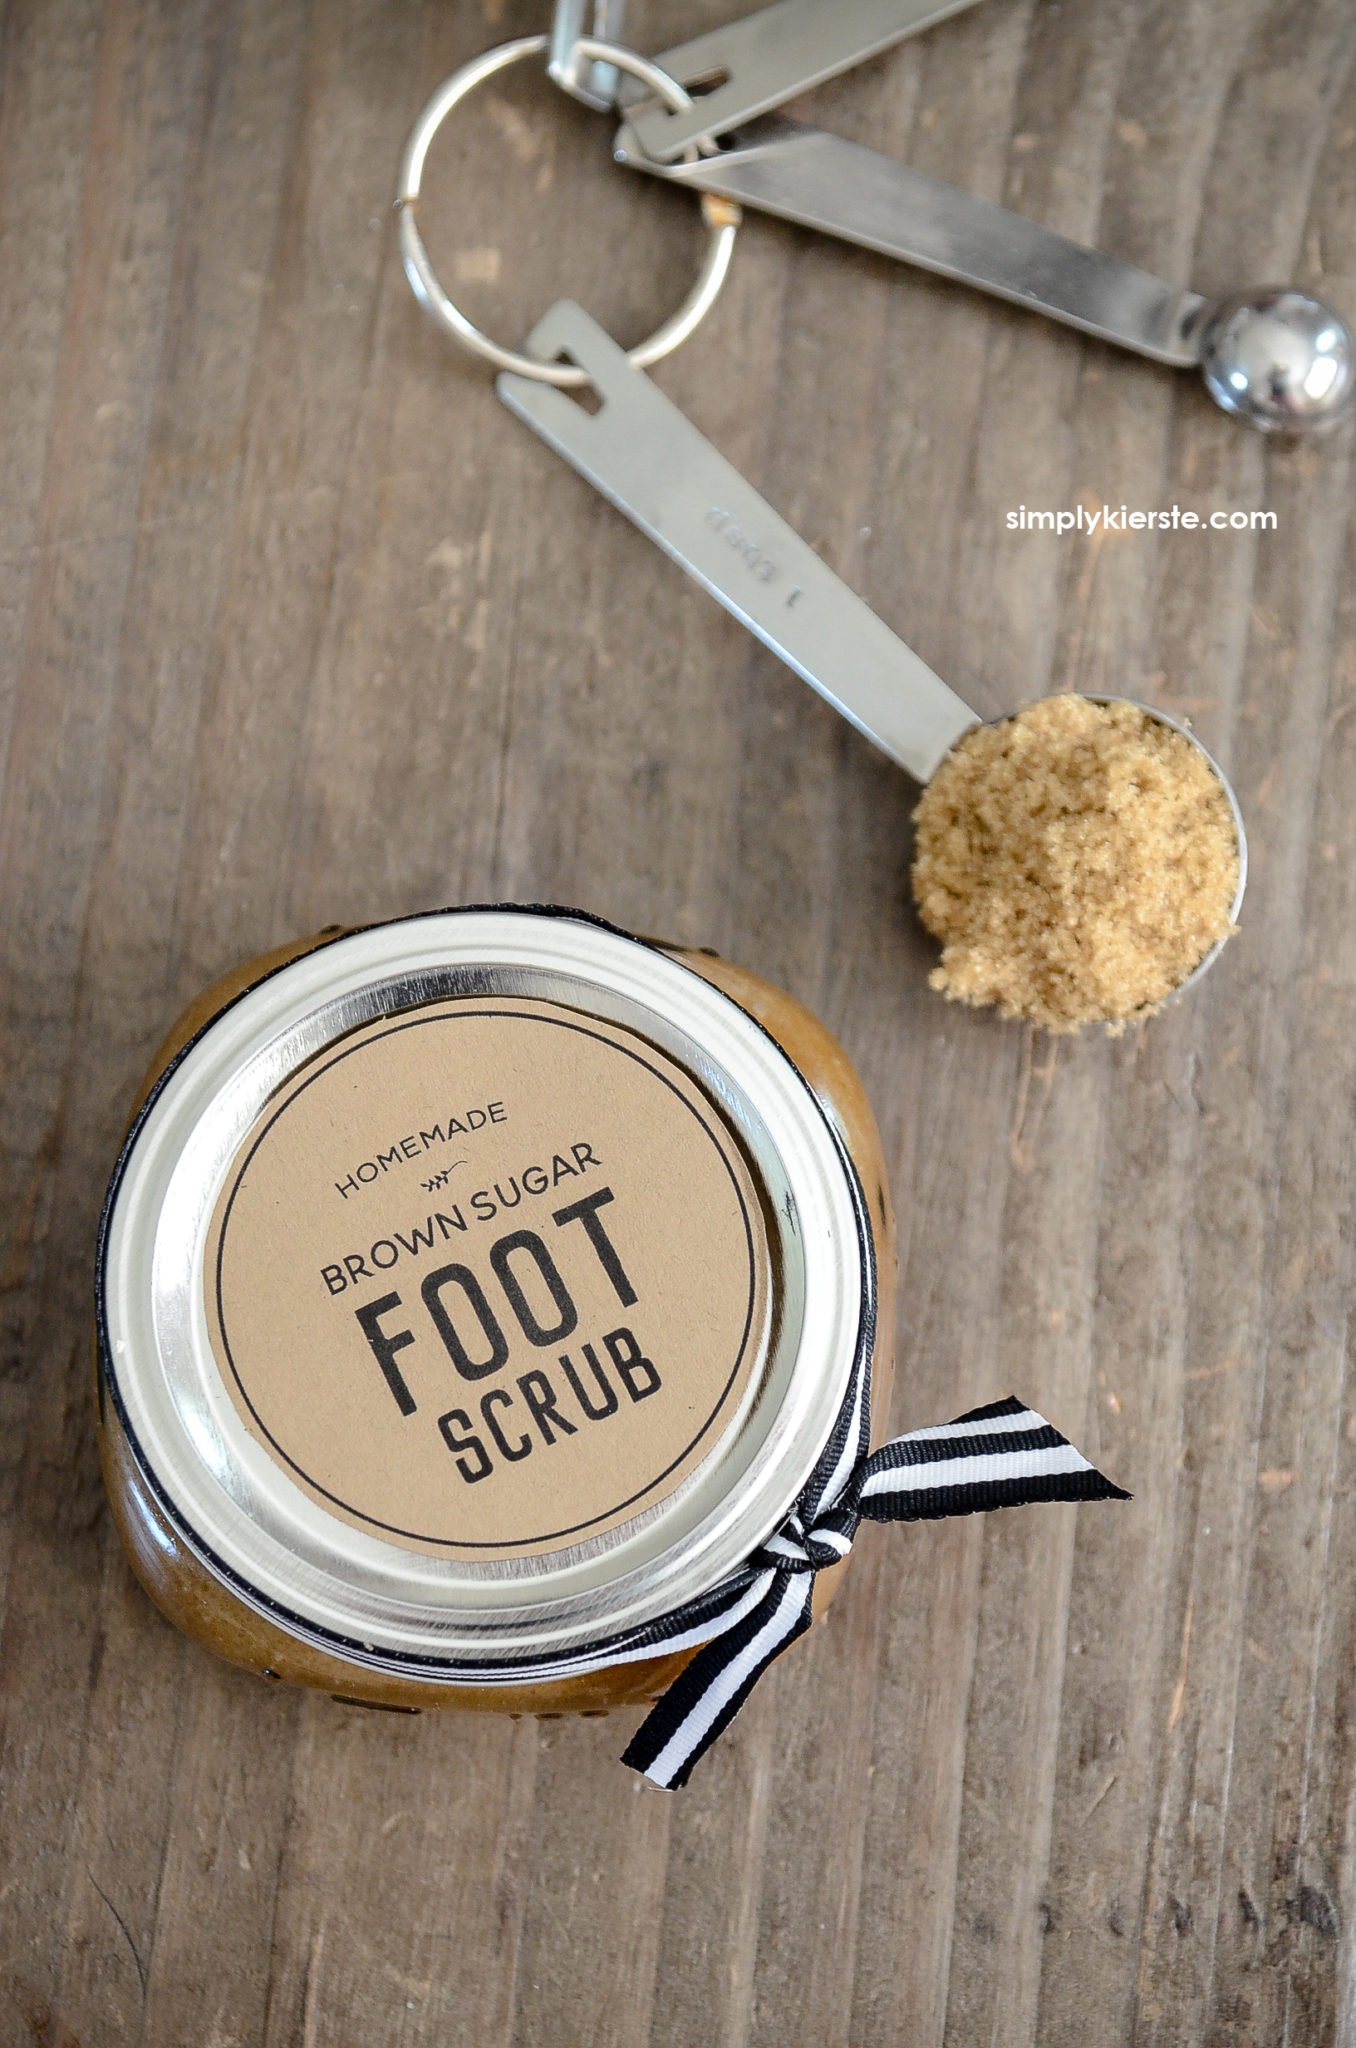 DIY Brown Sugar Foot Scrub Recipe